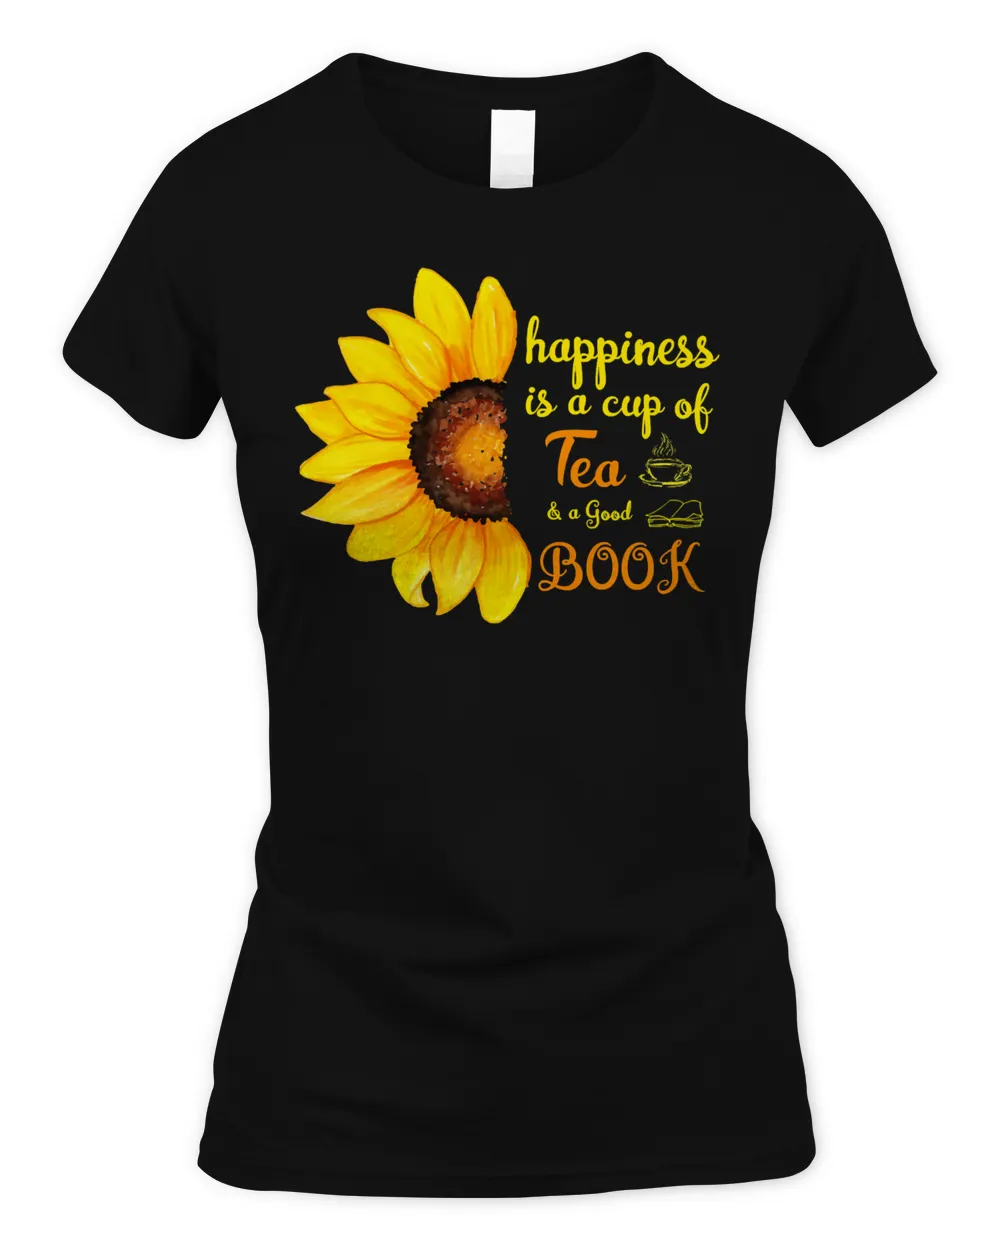 Book Reader Book Nerd Tea Lover Tee Reader Sayings Girls Love Books Gift 296 Reading Library